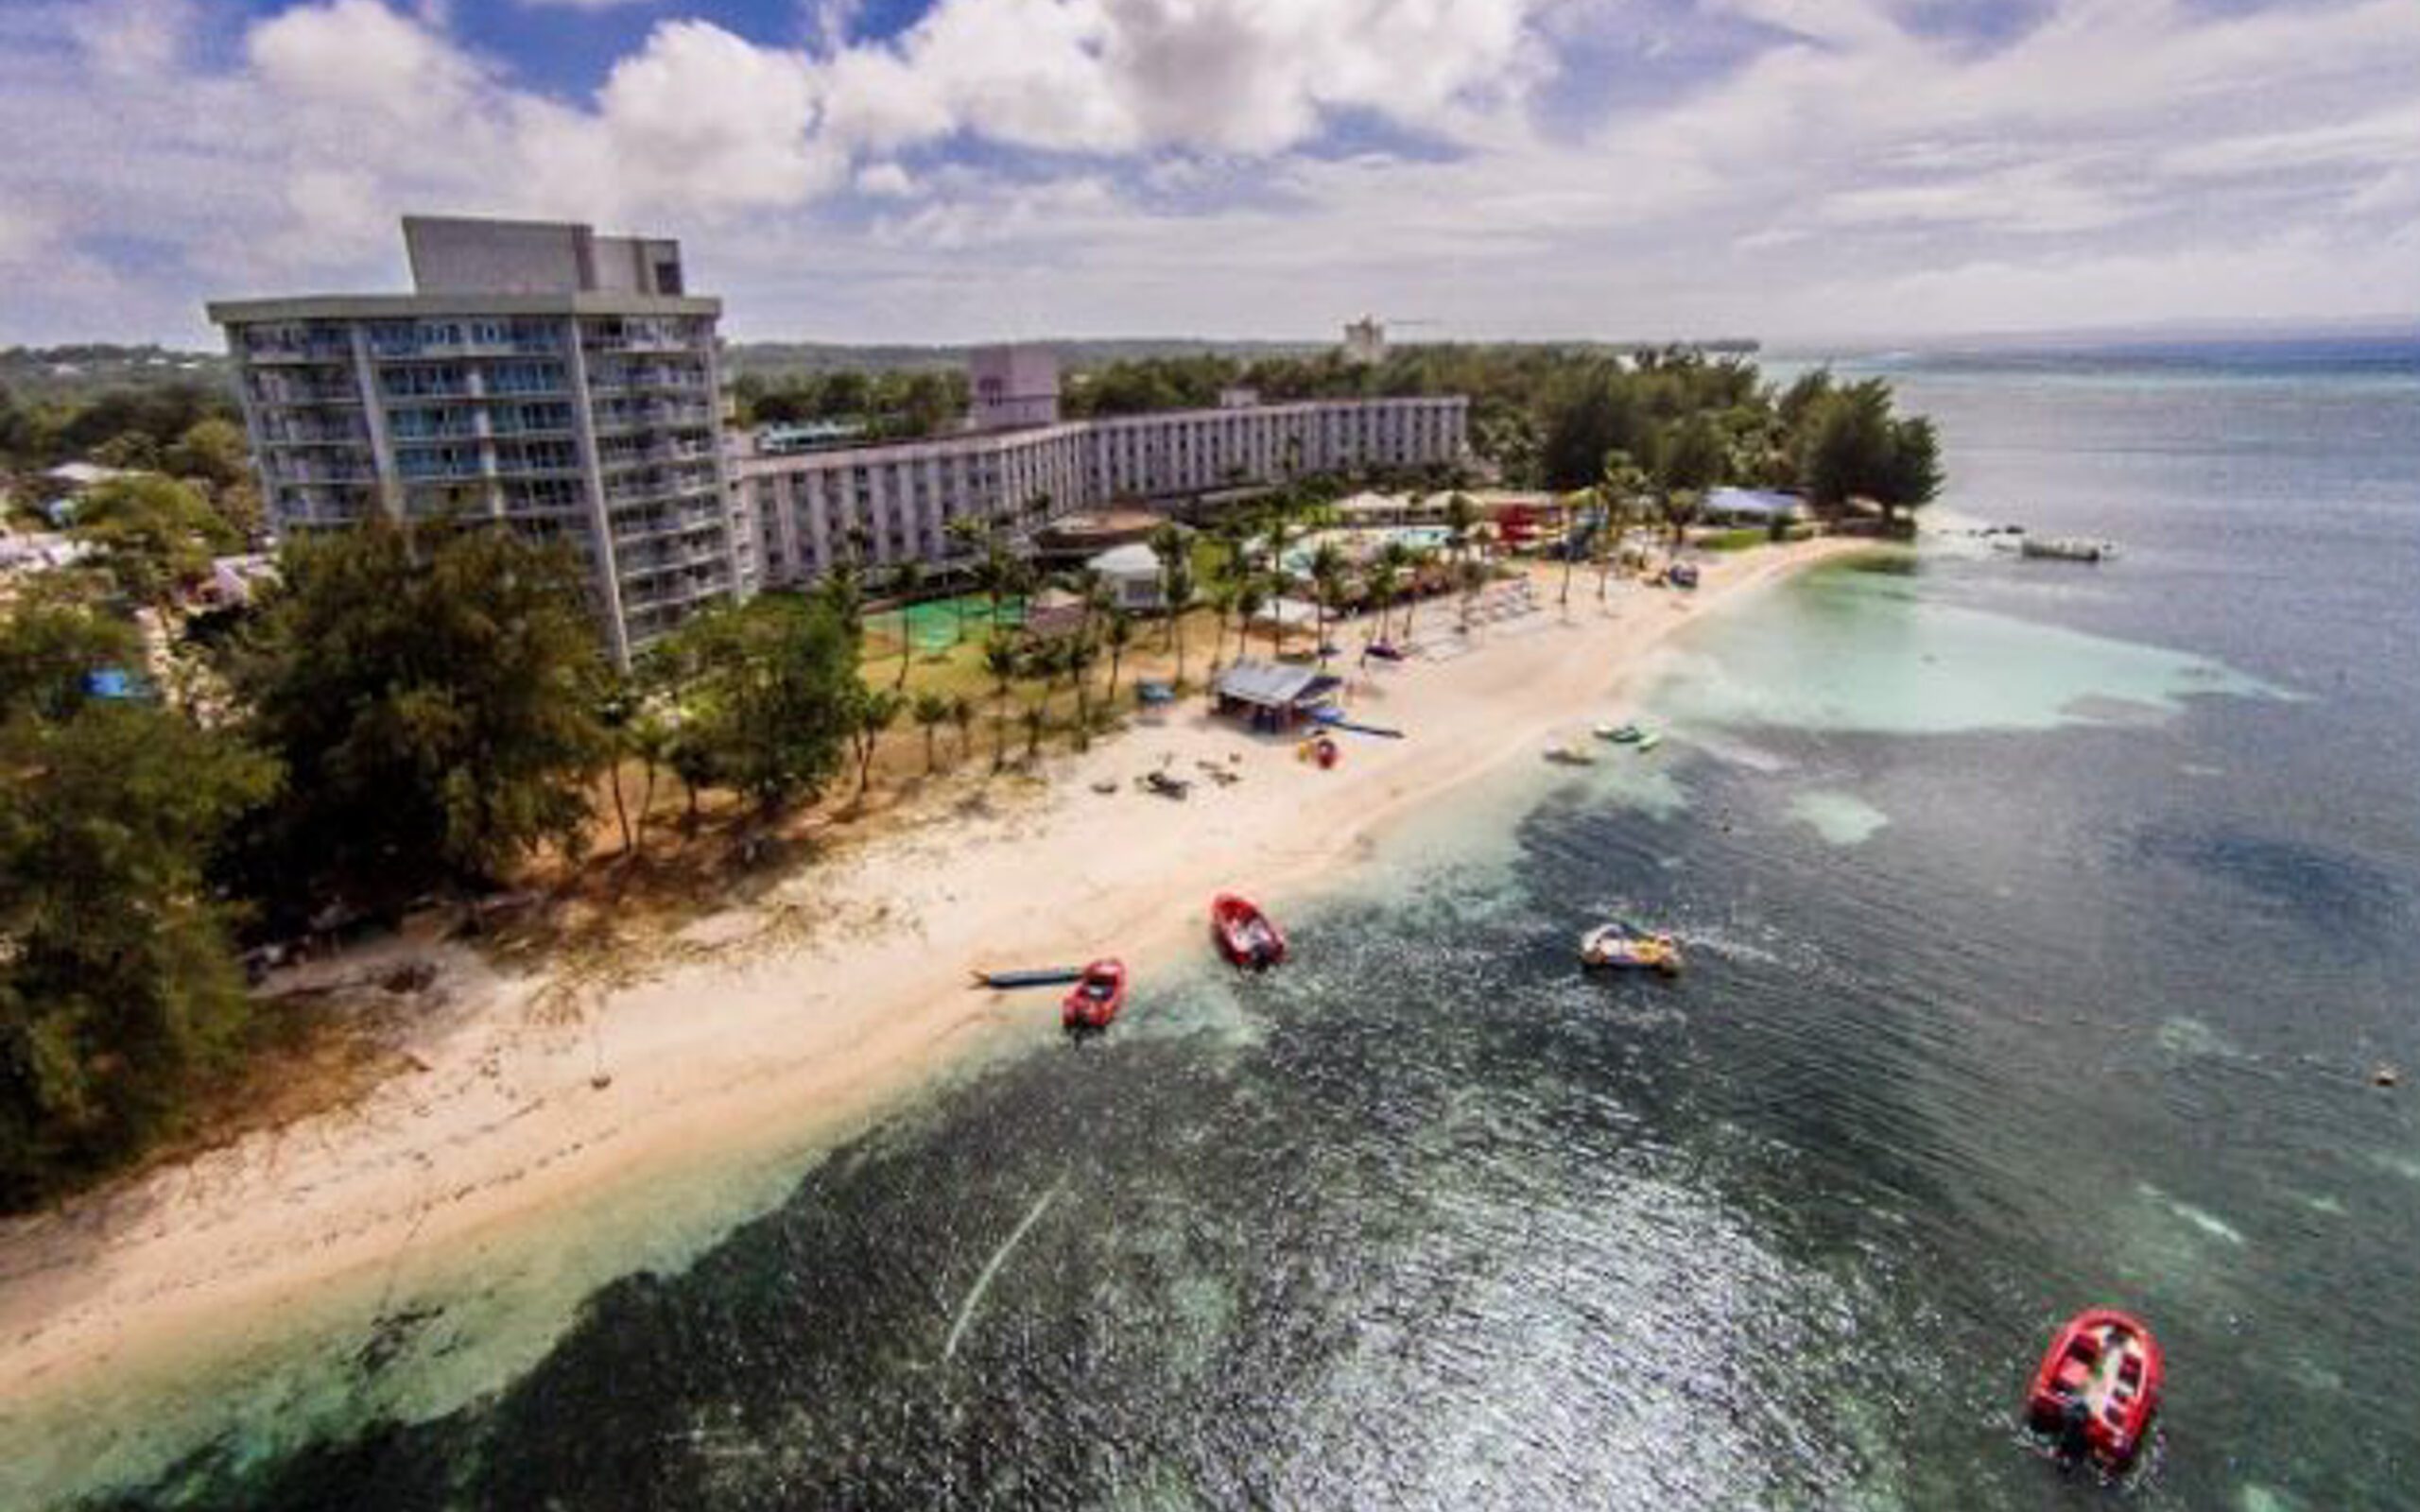 8 things to see, do in island getaway, Saipan